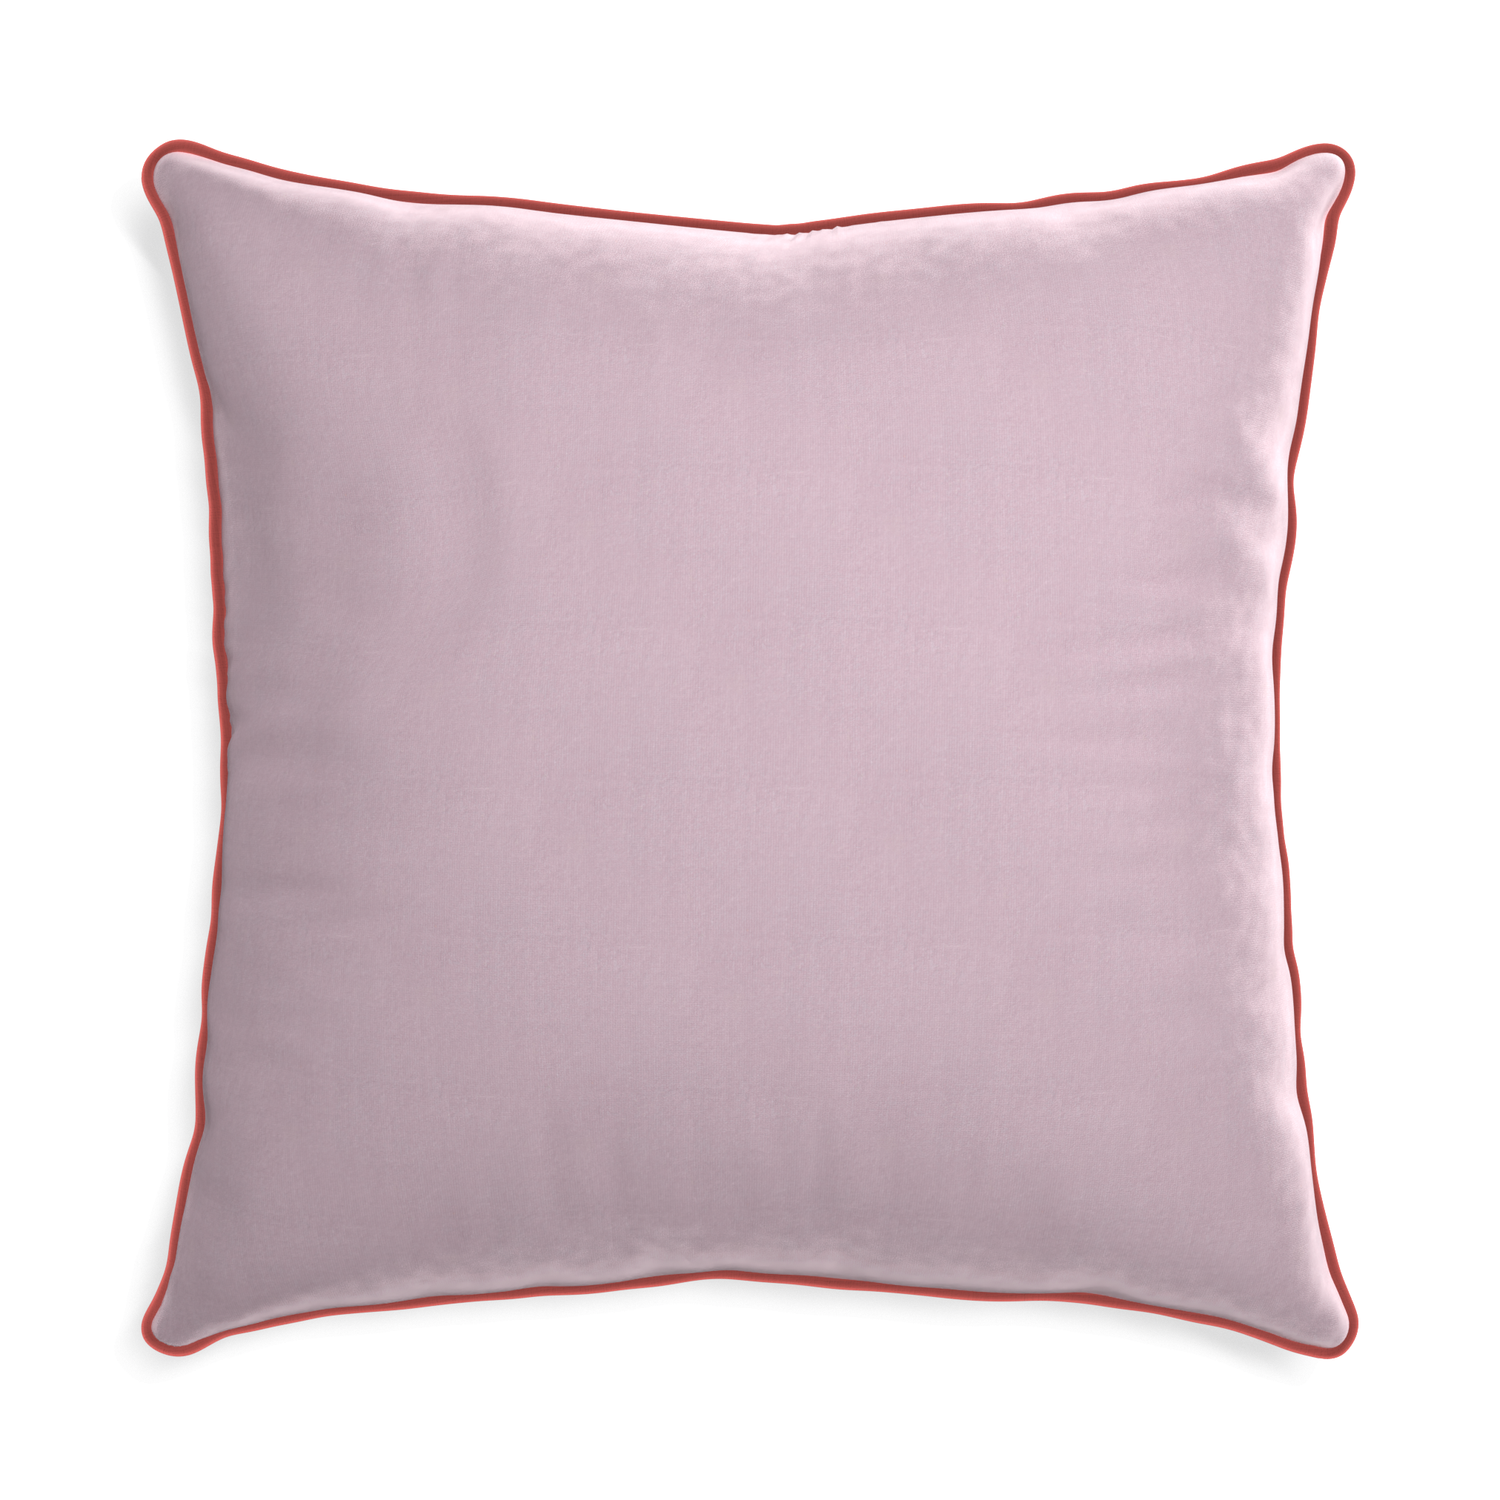 Euro-sham lilac velvet custom pillow with c piping on white background